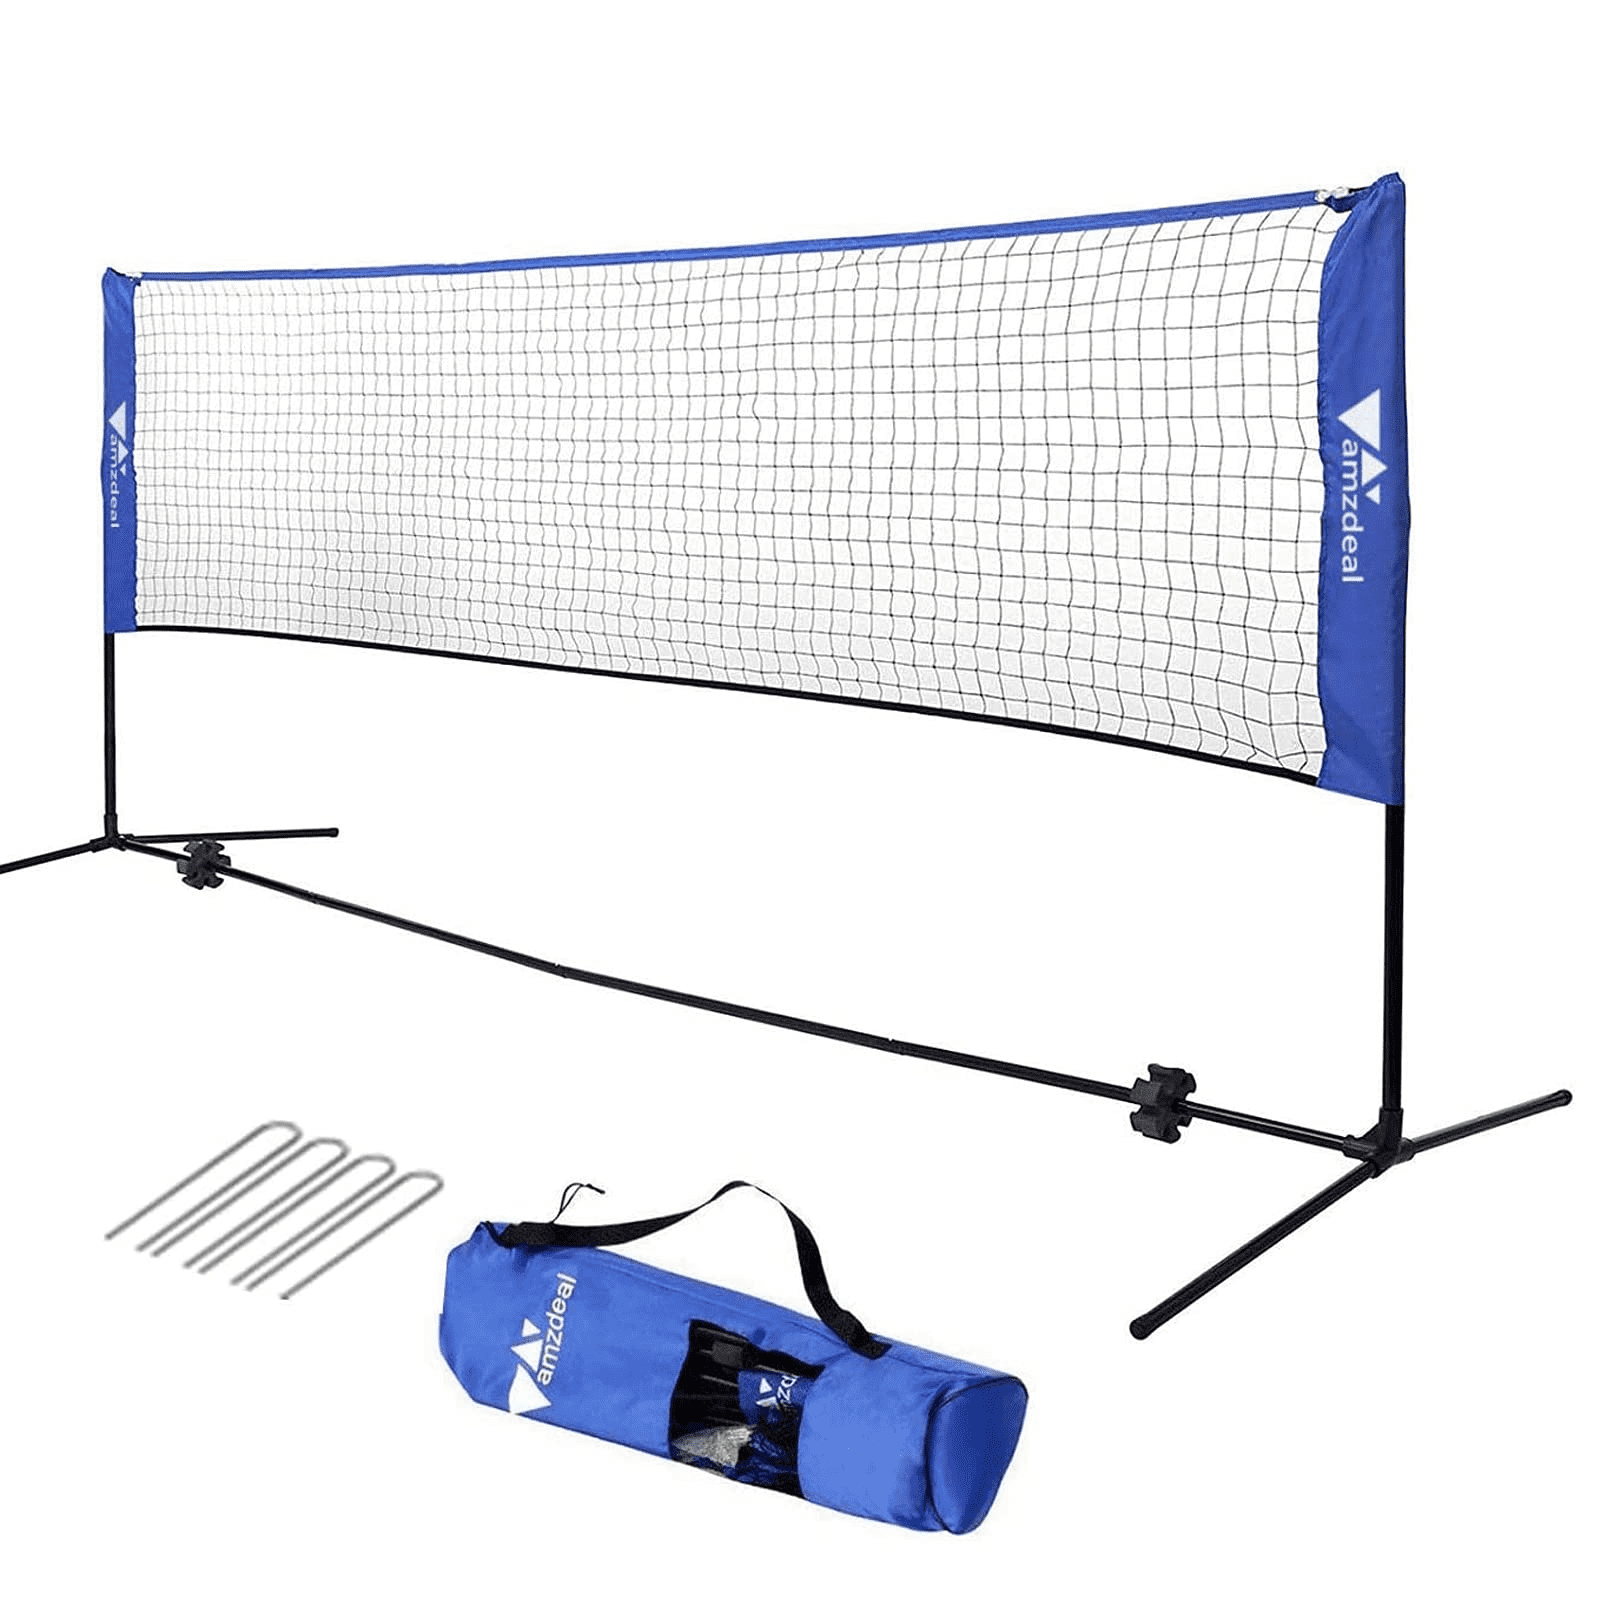 Vaught Sports Instant Tennis Kit Portable Net System 9 Feet Tennis Net 